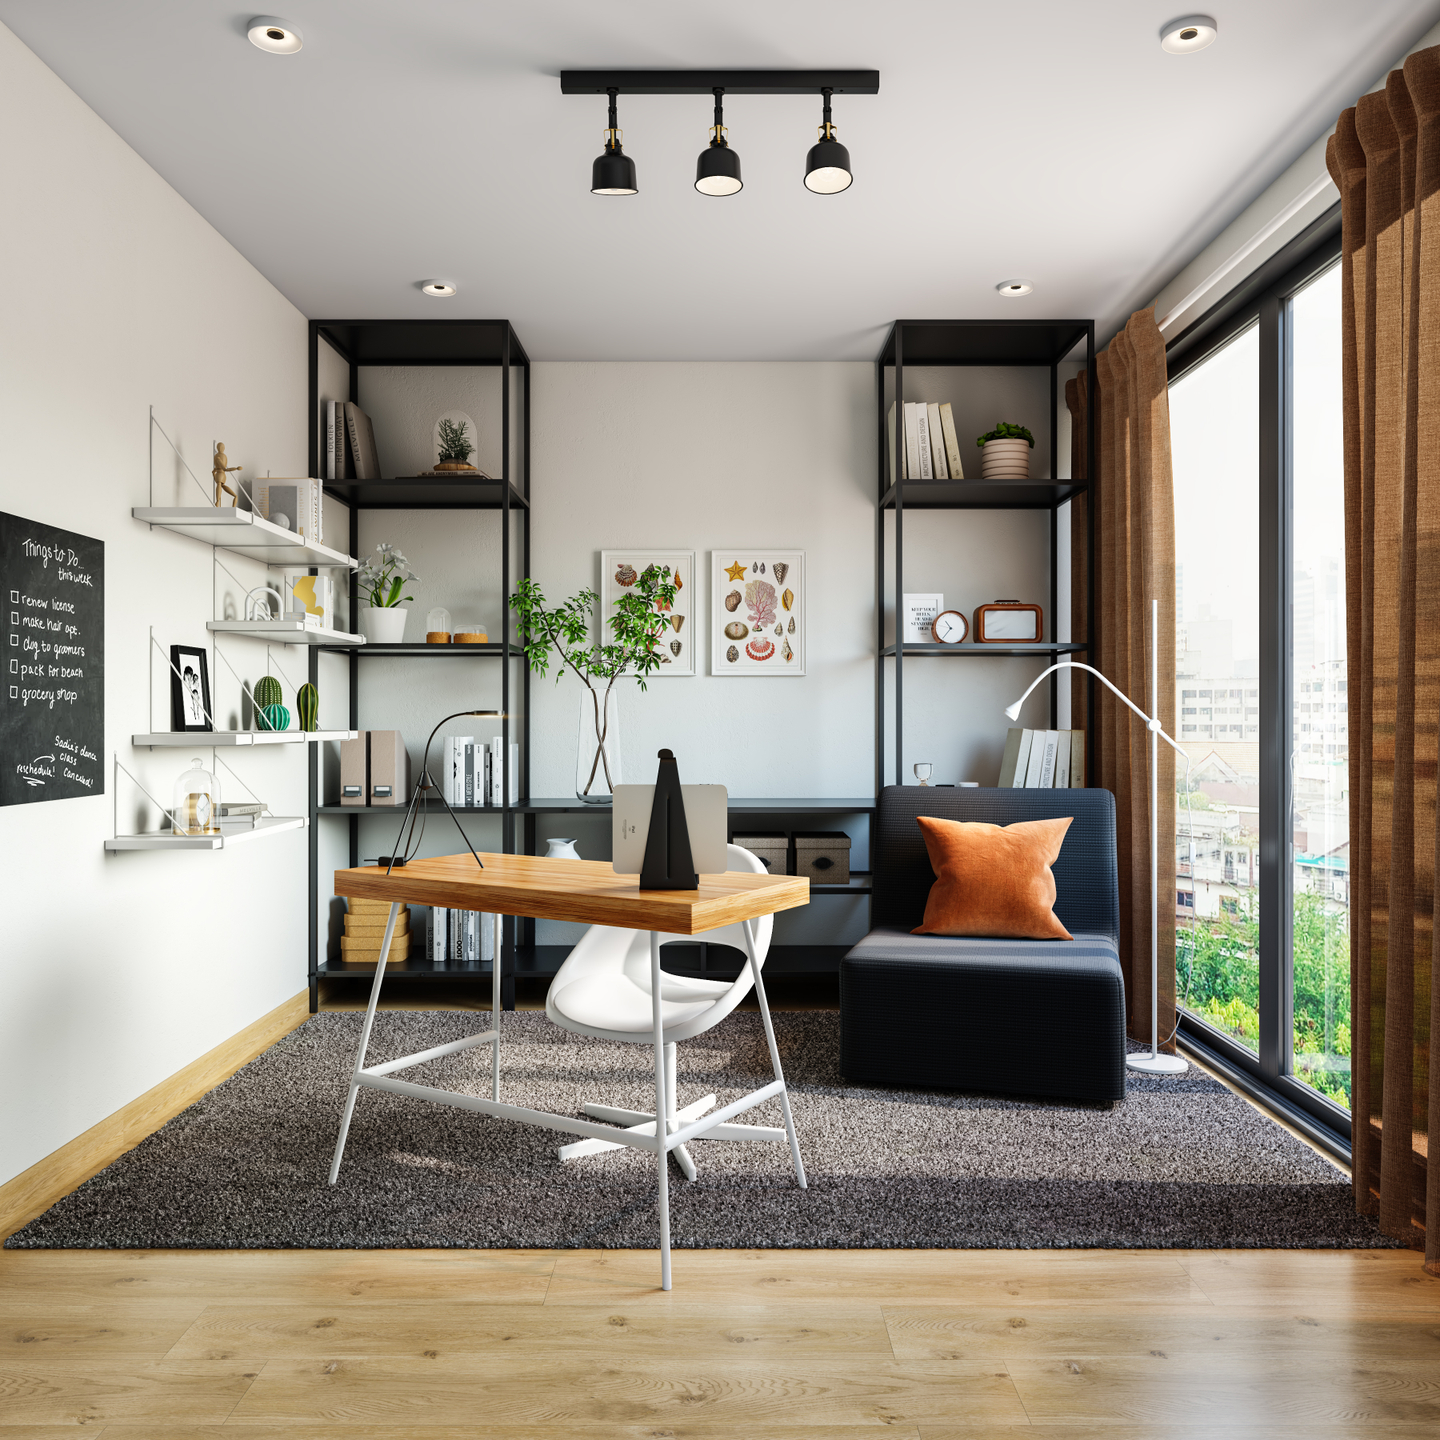 Rustic Home Office Design - Livspace